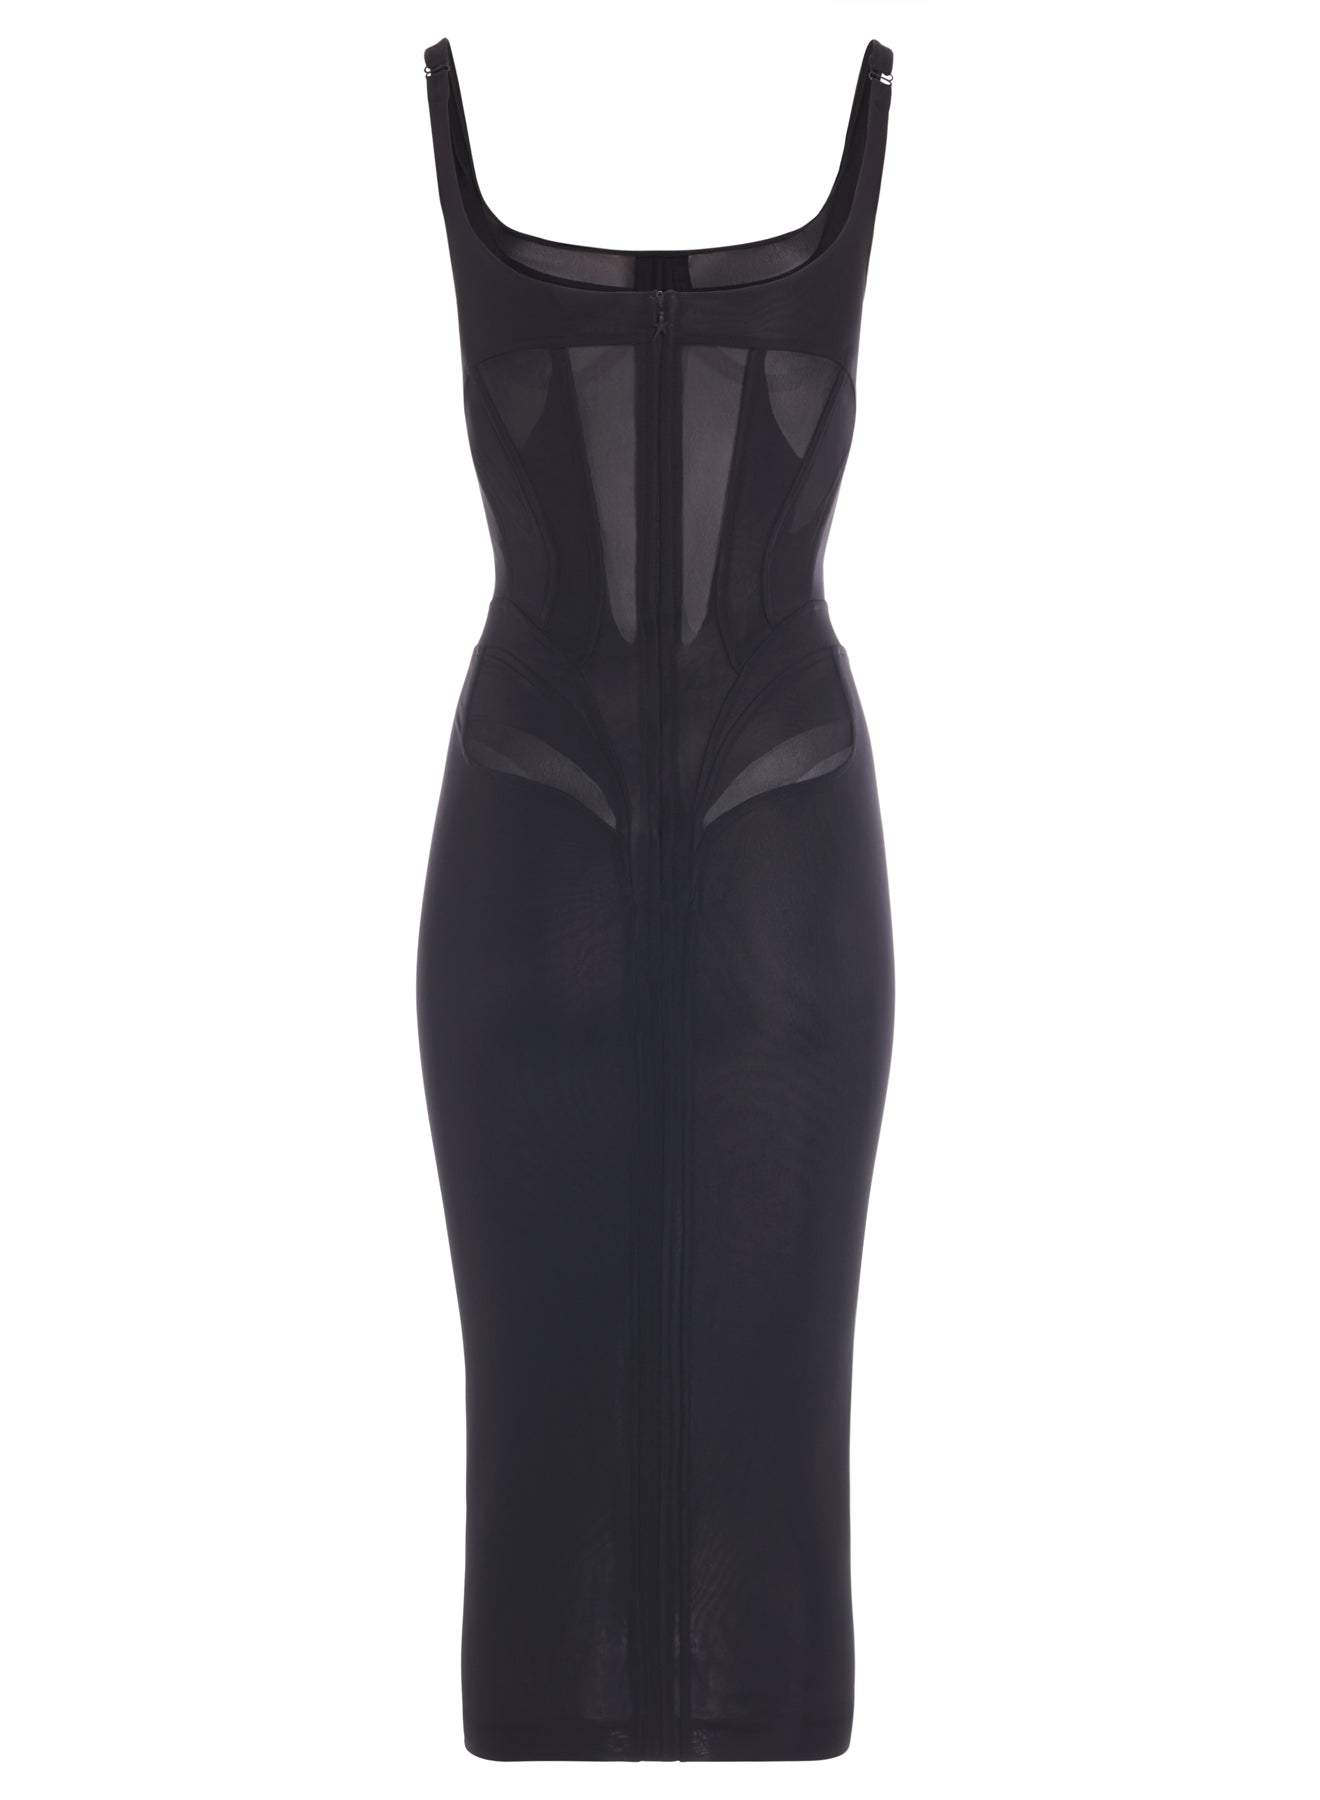 black corseted lingerie midi dress